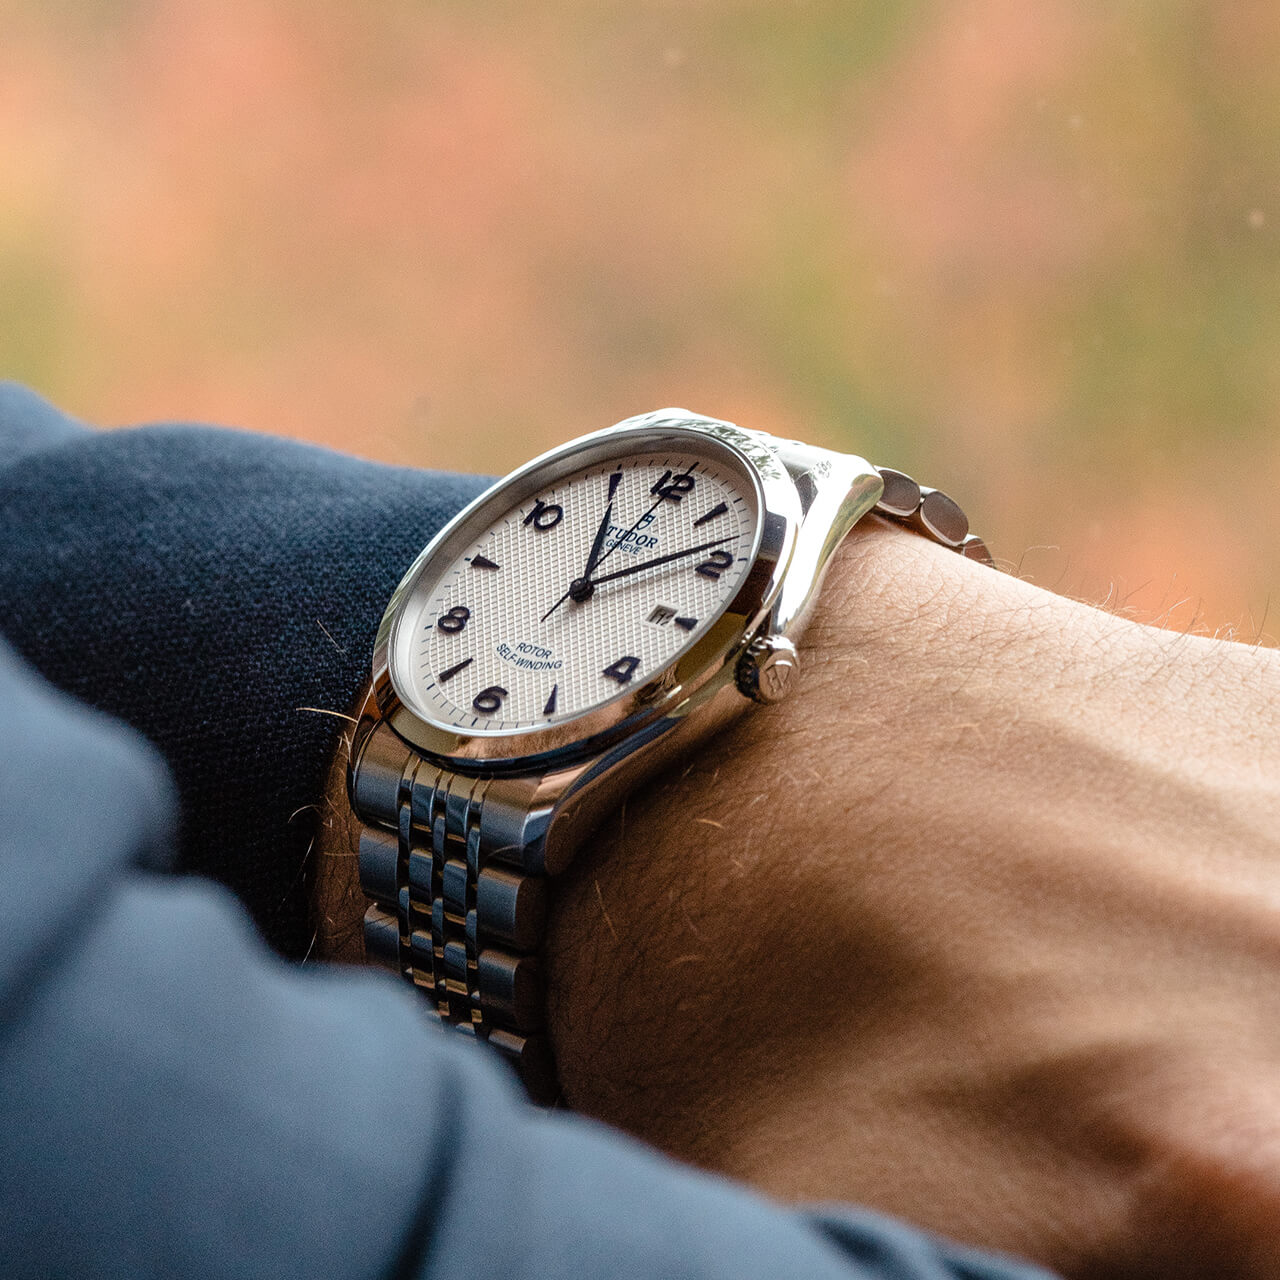 A man's wrist with a M91651-0012 watch on it.